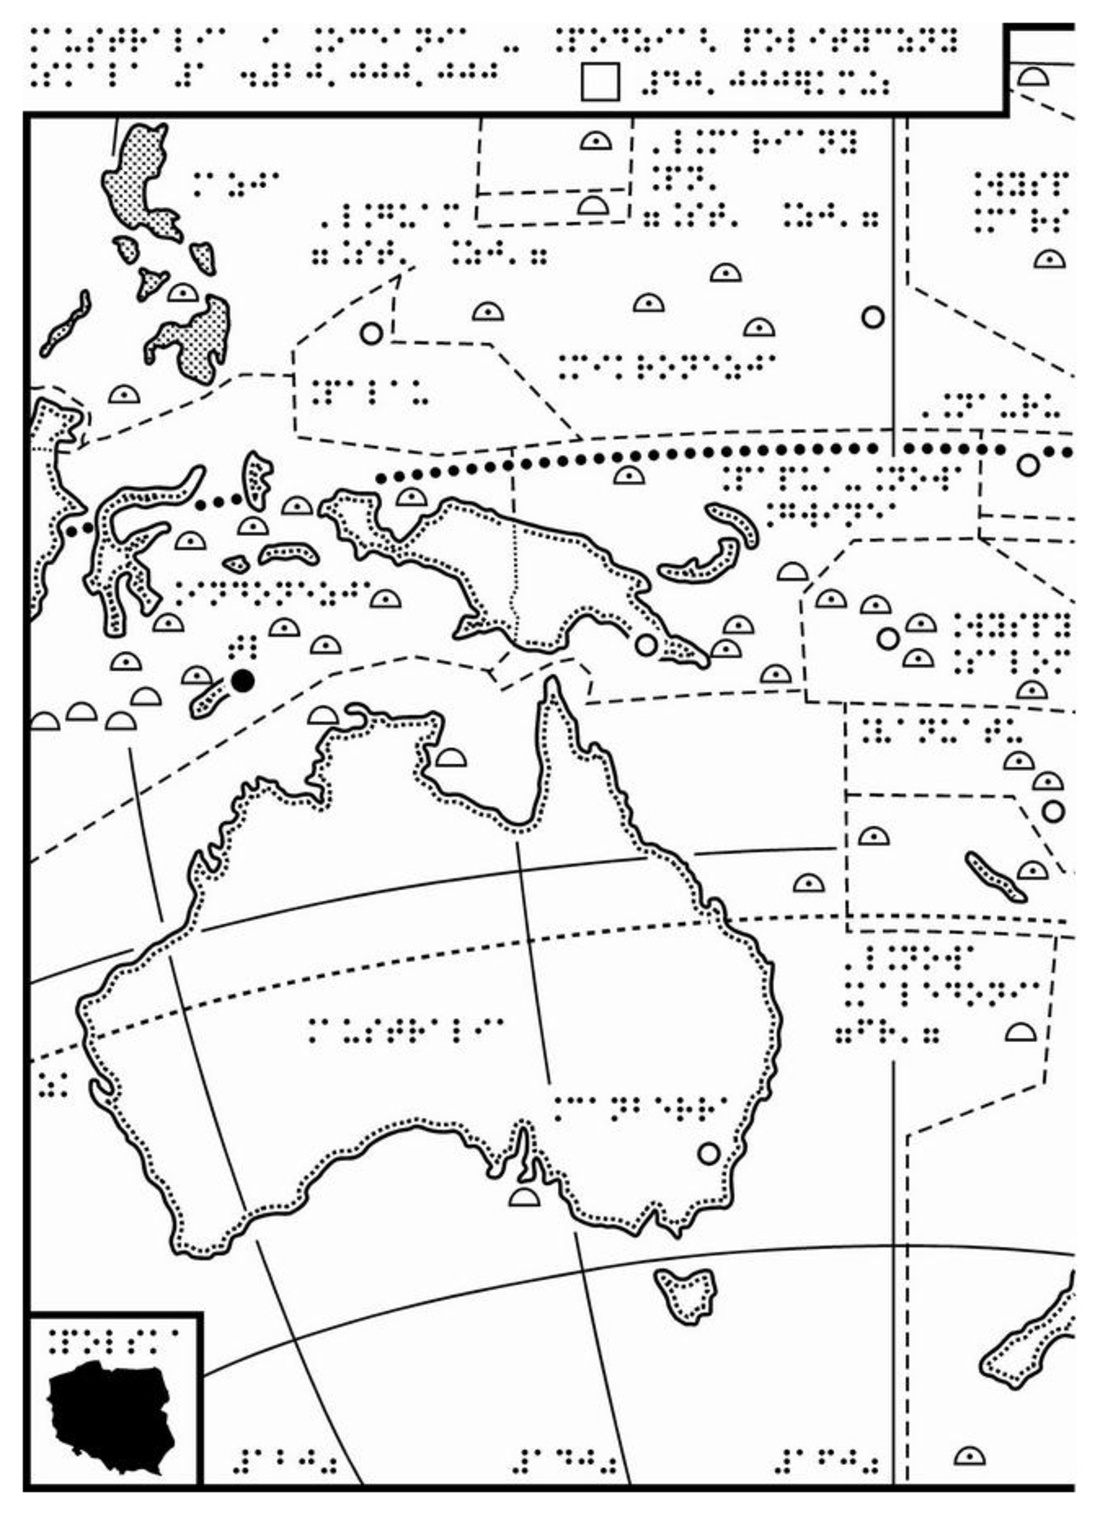 Australia I Oceania Mapa Konturowa Australia I Oceania Mapa Polityczna Konturowa | Kraków Mapa